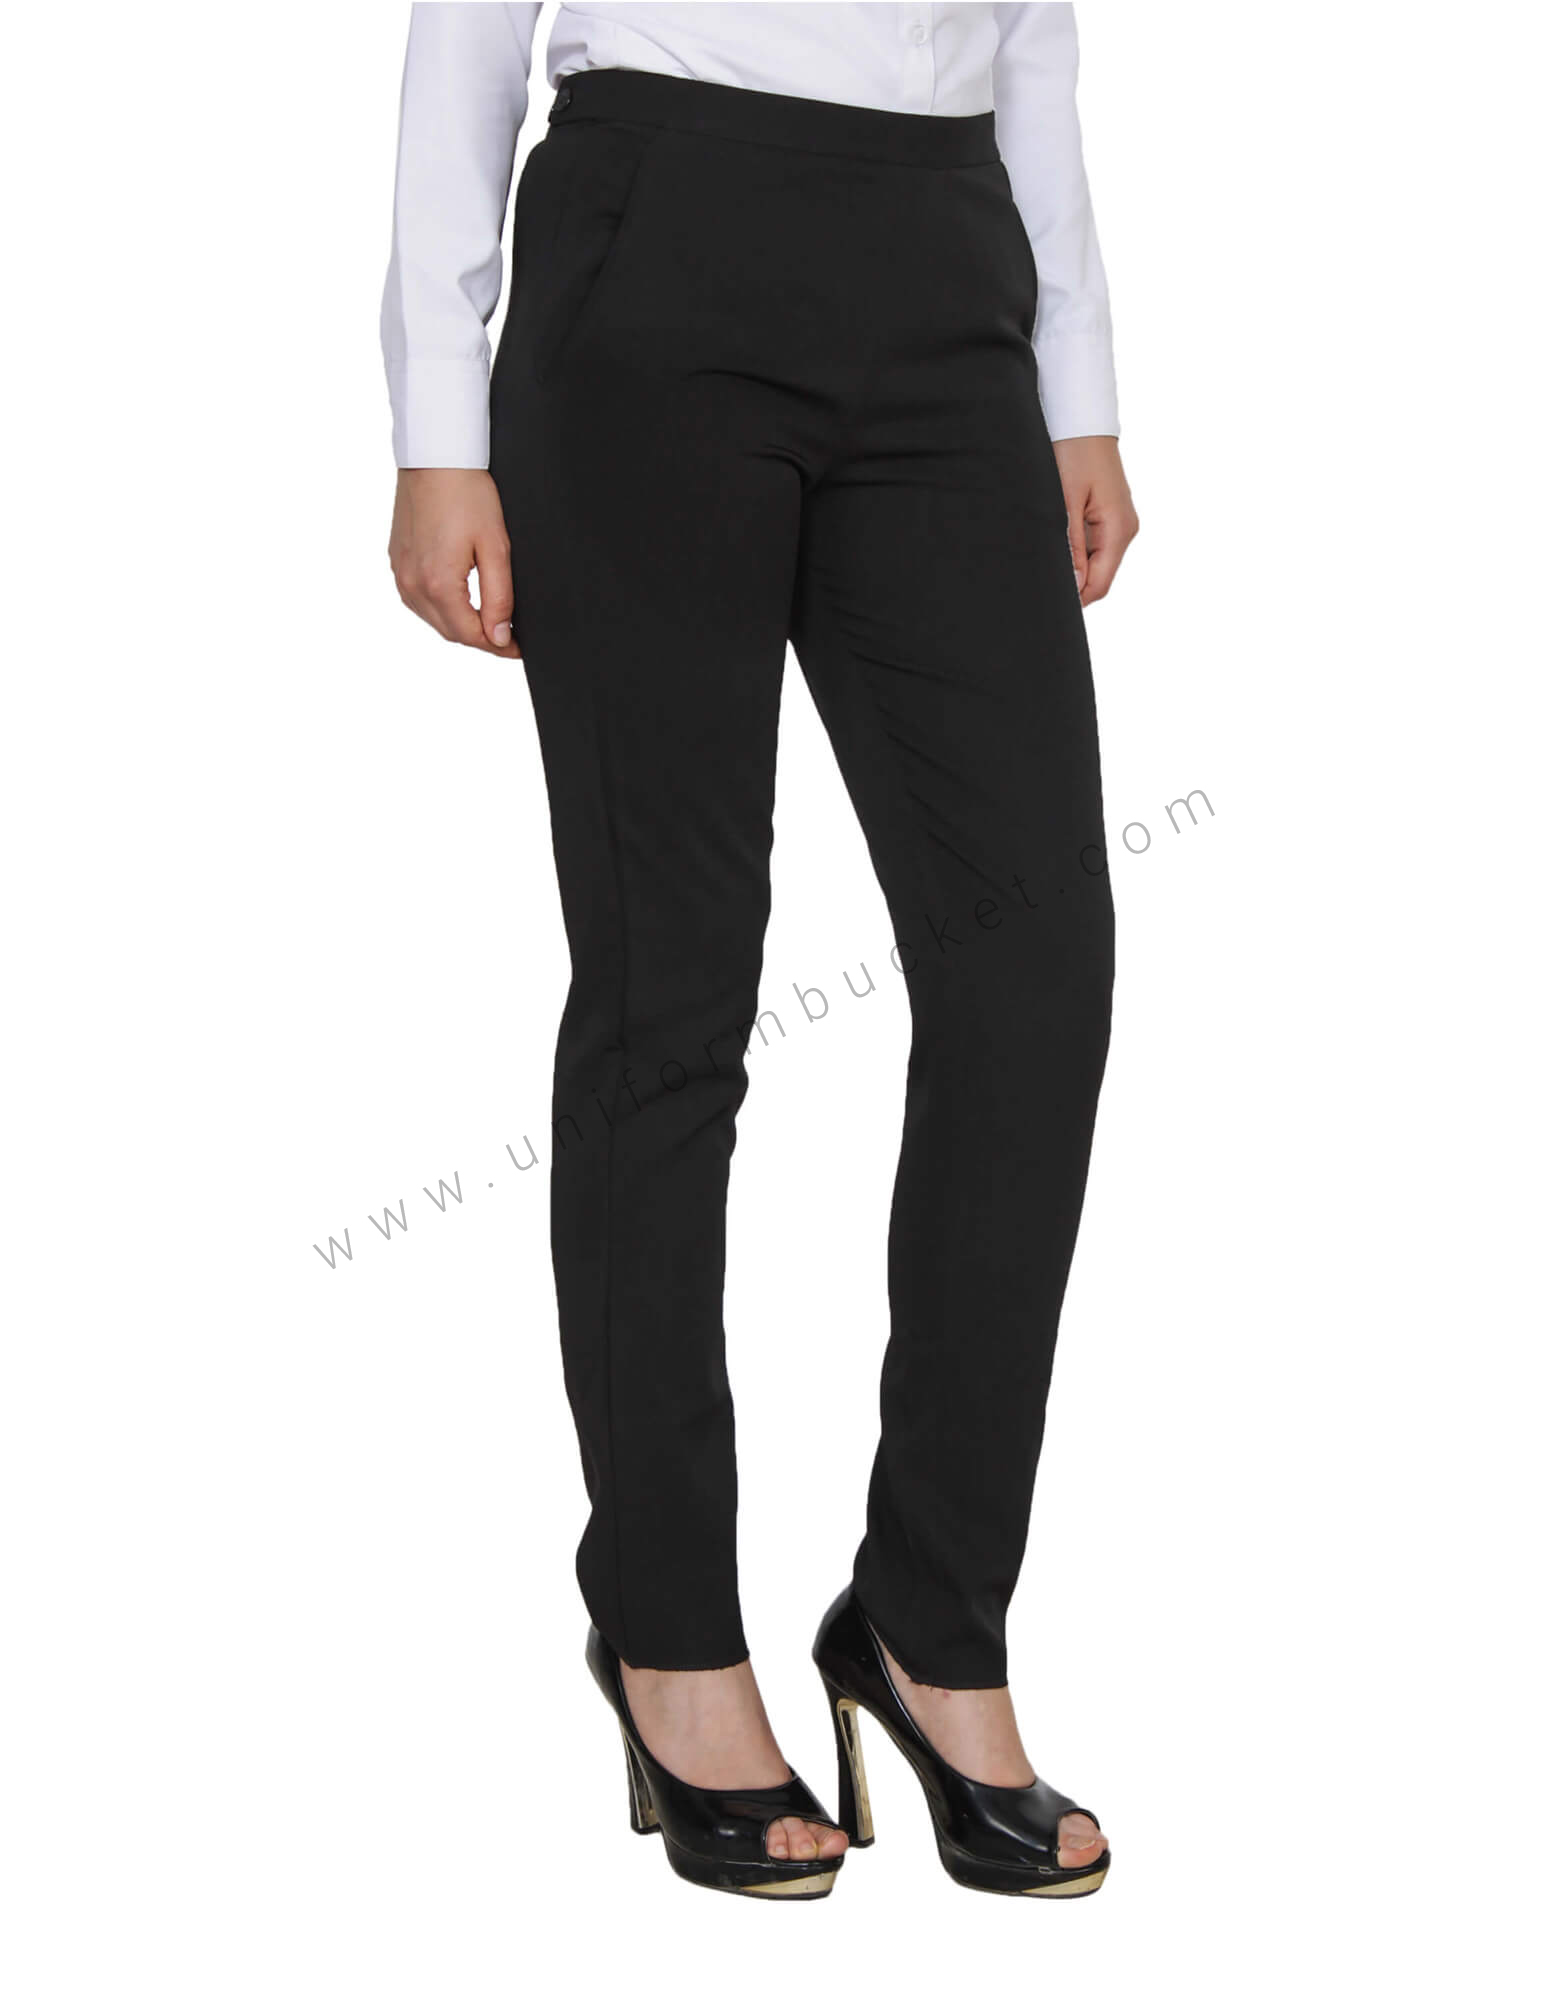 Beige Colored Linen Look Trousers  Intermod Workwear